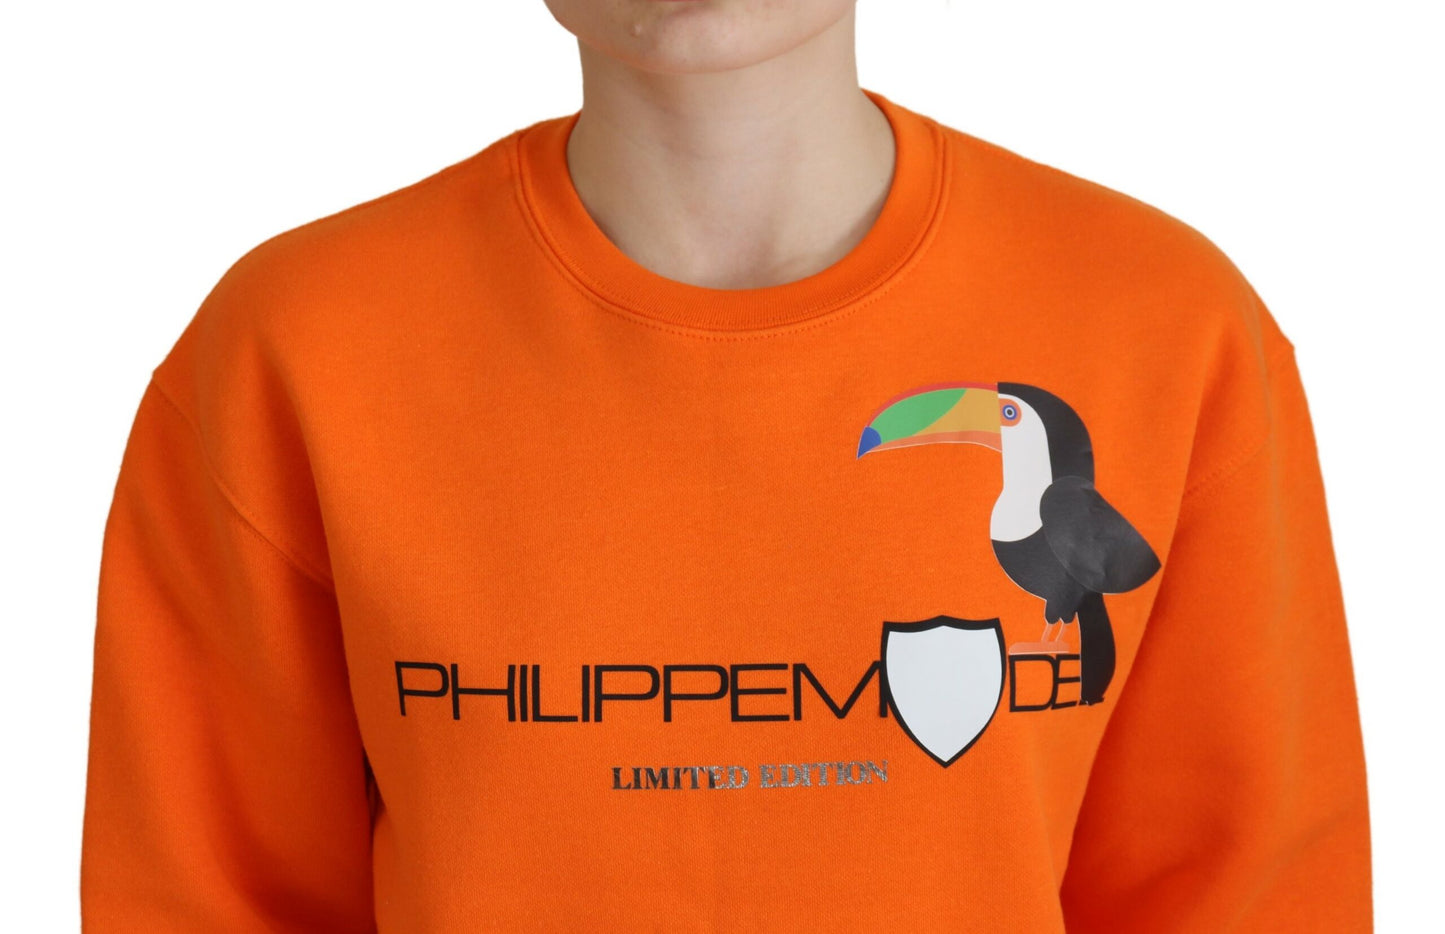 Philippe Model Women's Orange Printed Long Sleeves Pullover Sweater